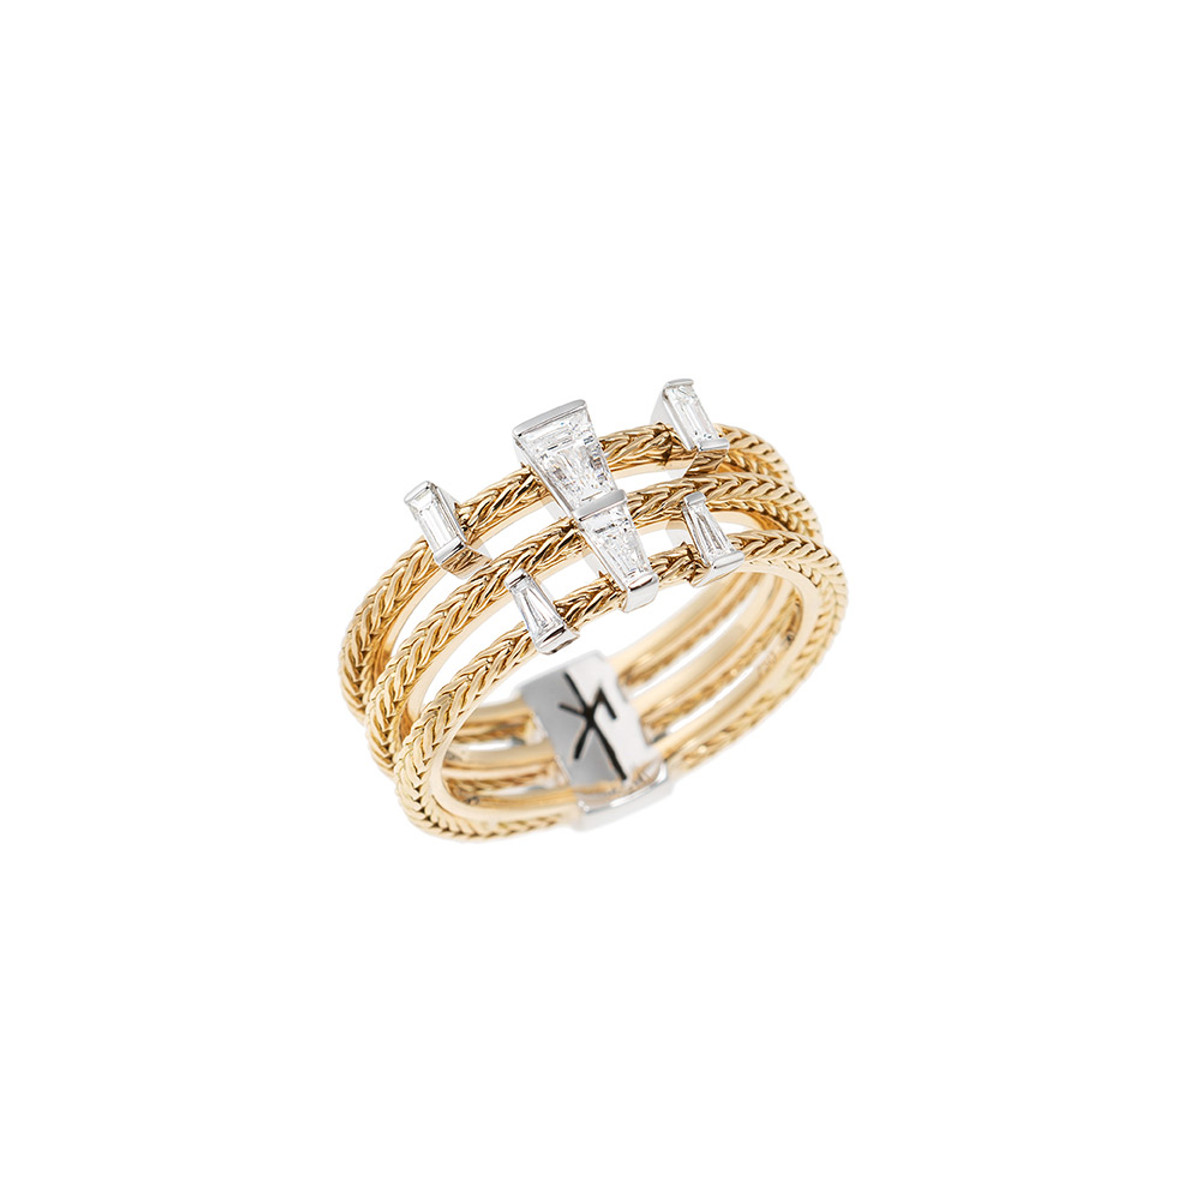 Nikos Koulis 18K Yellow & White Gold Together Diamond Ring-44458 Product Image